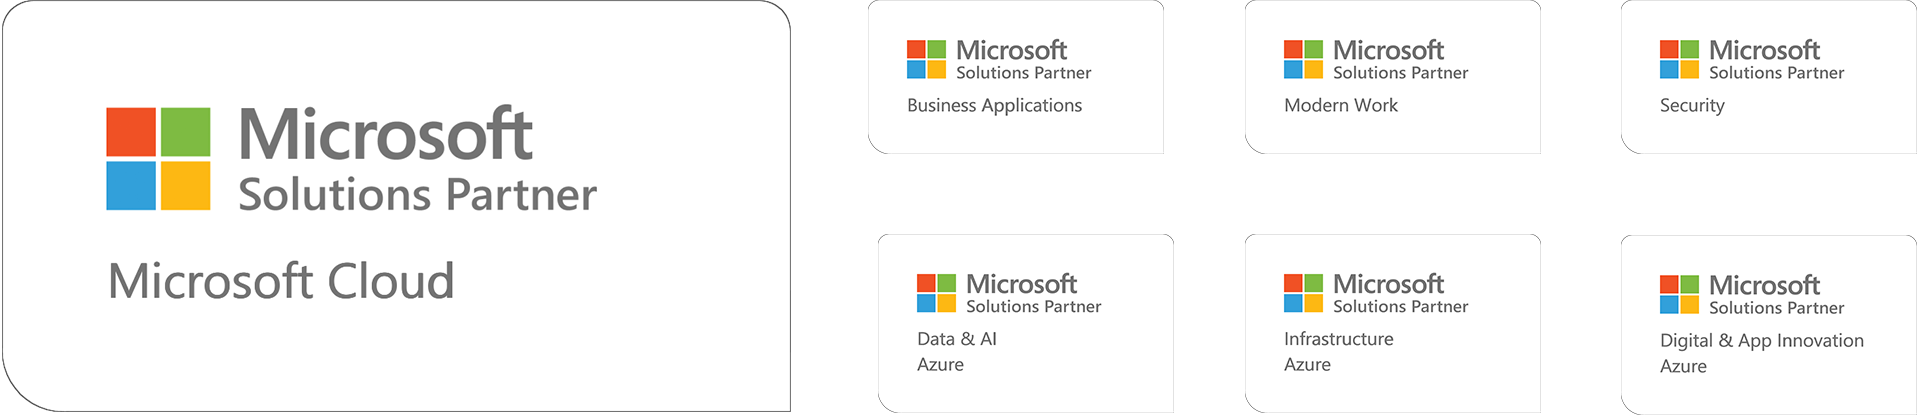 microsoft-solutions-partner-badges-all-logo